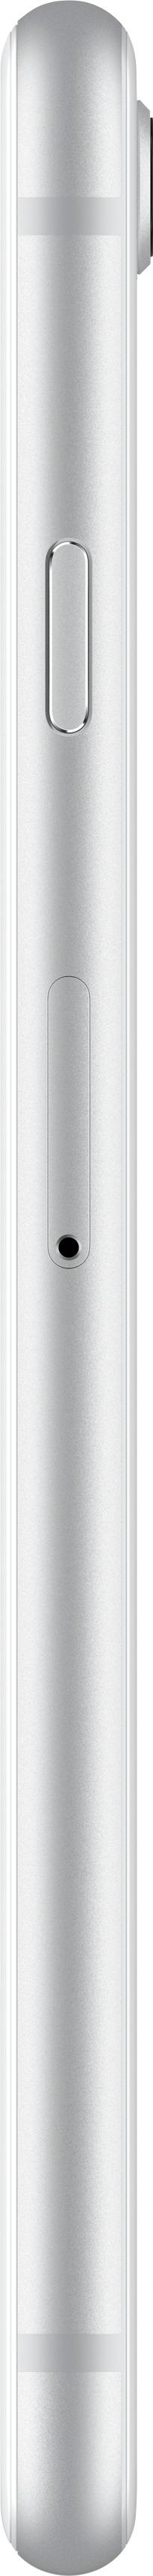 Best Buy: Apple iPhone 8 256GB Silver (Verizon) MQ7G2LL/A